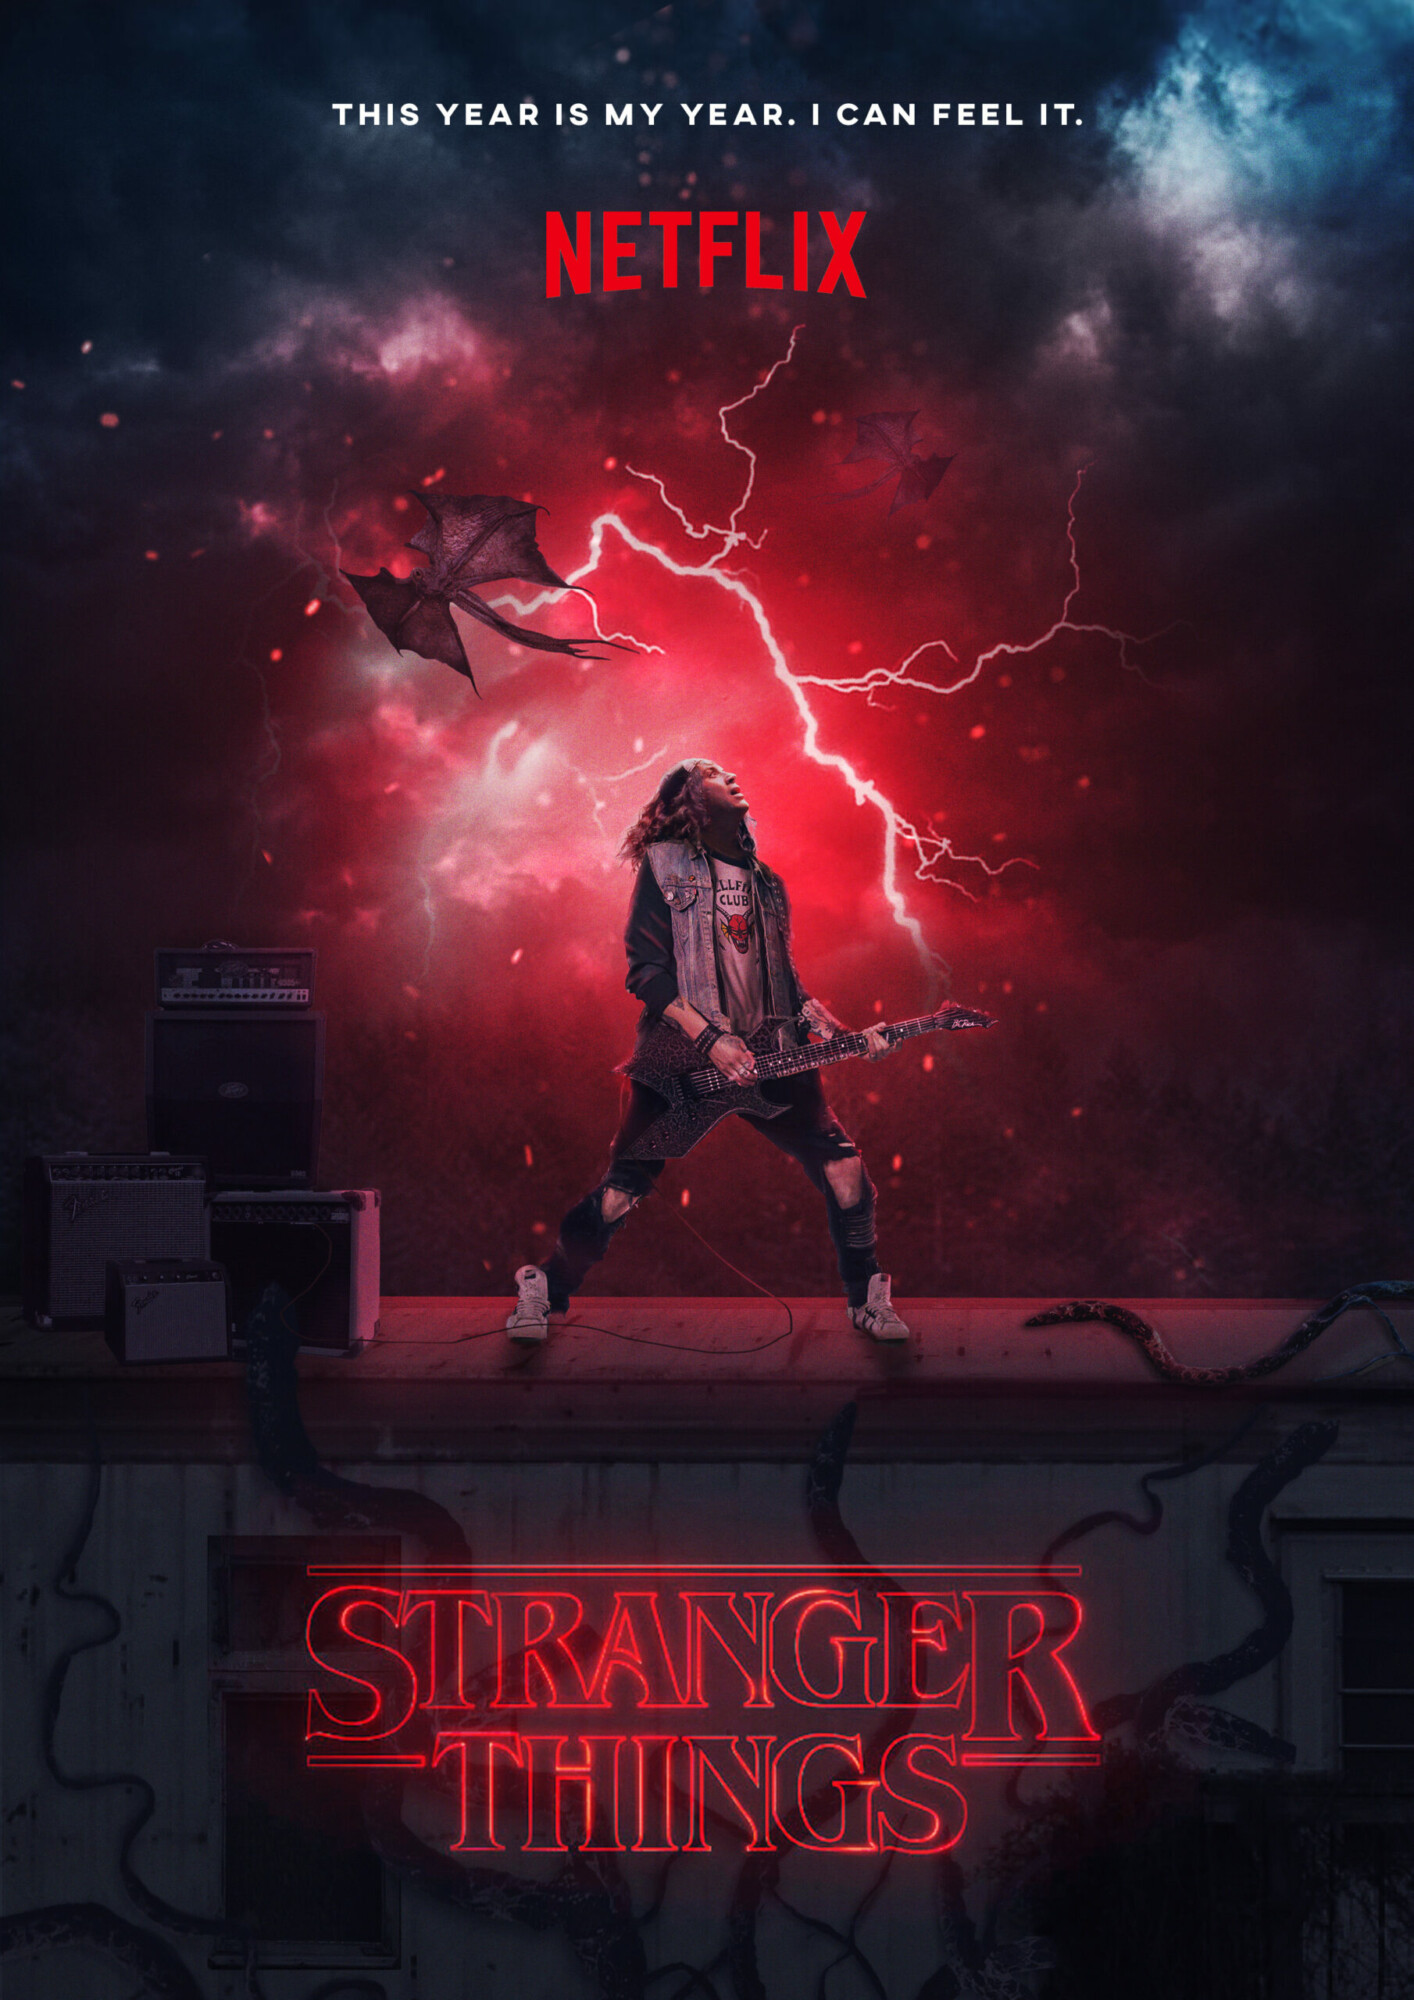 Stranger Things Concept poster